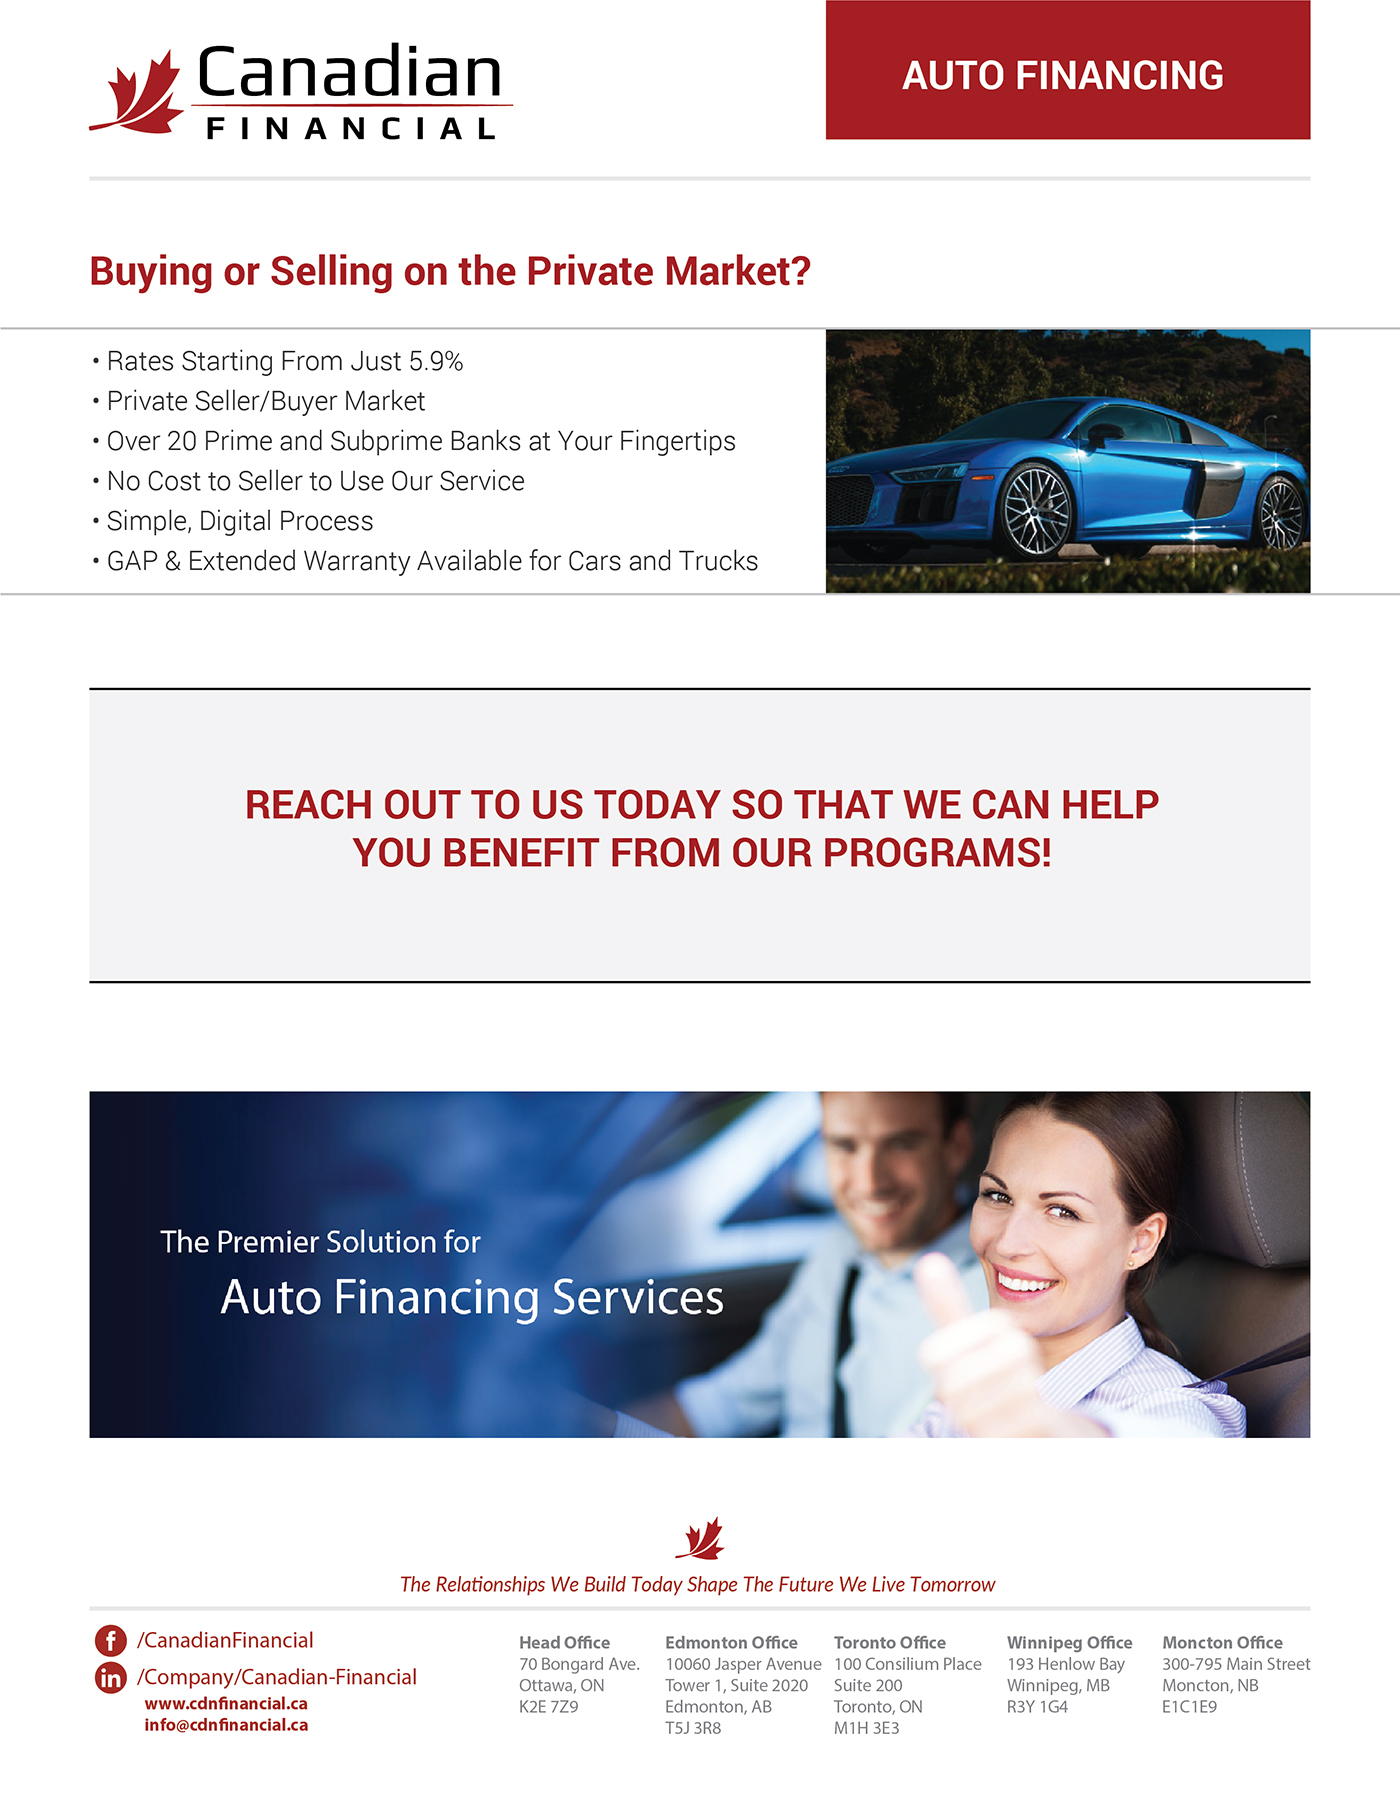 cfs-auto-financing-new